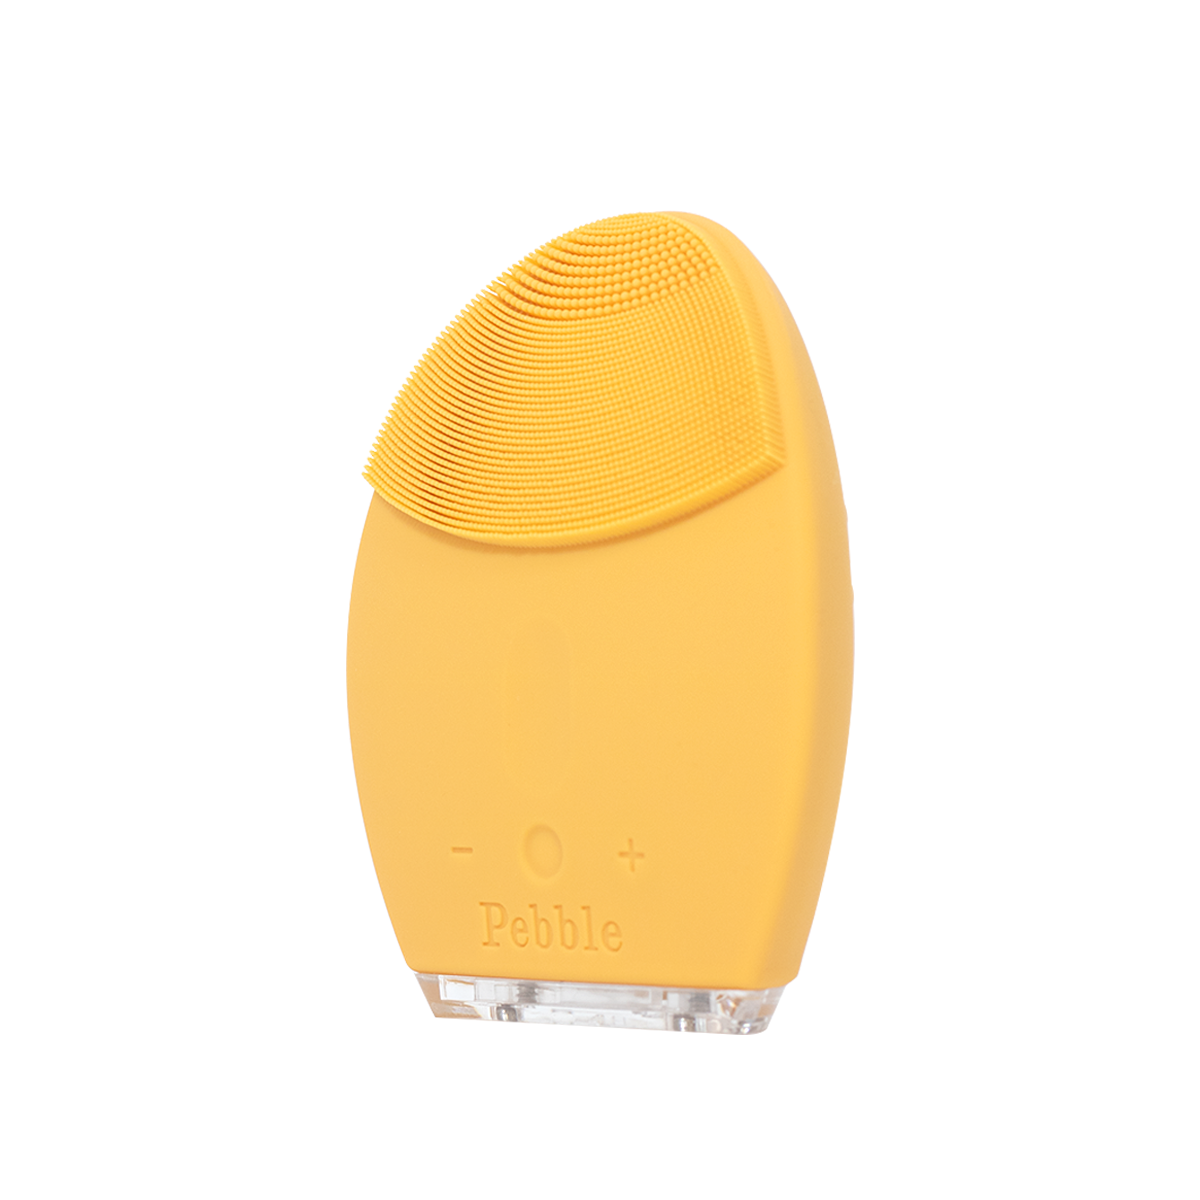 Máy rửa mặt Silicon Pebble Lisa face washing machine (Spicy Mustard) Gen 5